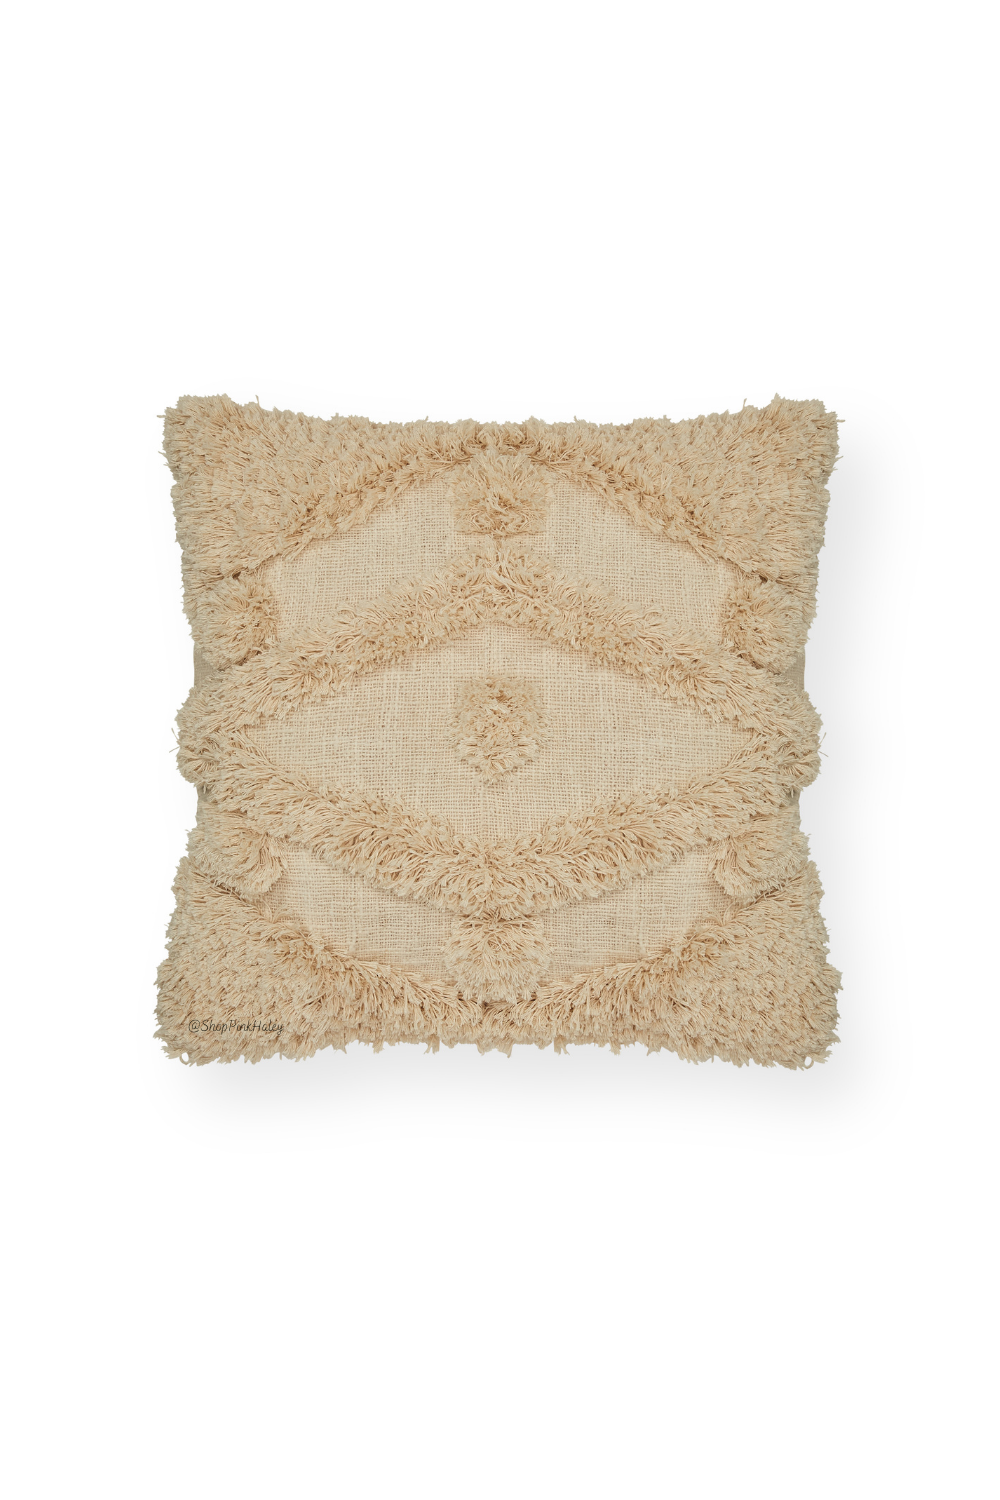 Savannah Hand-loomed Organic Cotton Throw Pillow Cover in Cream